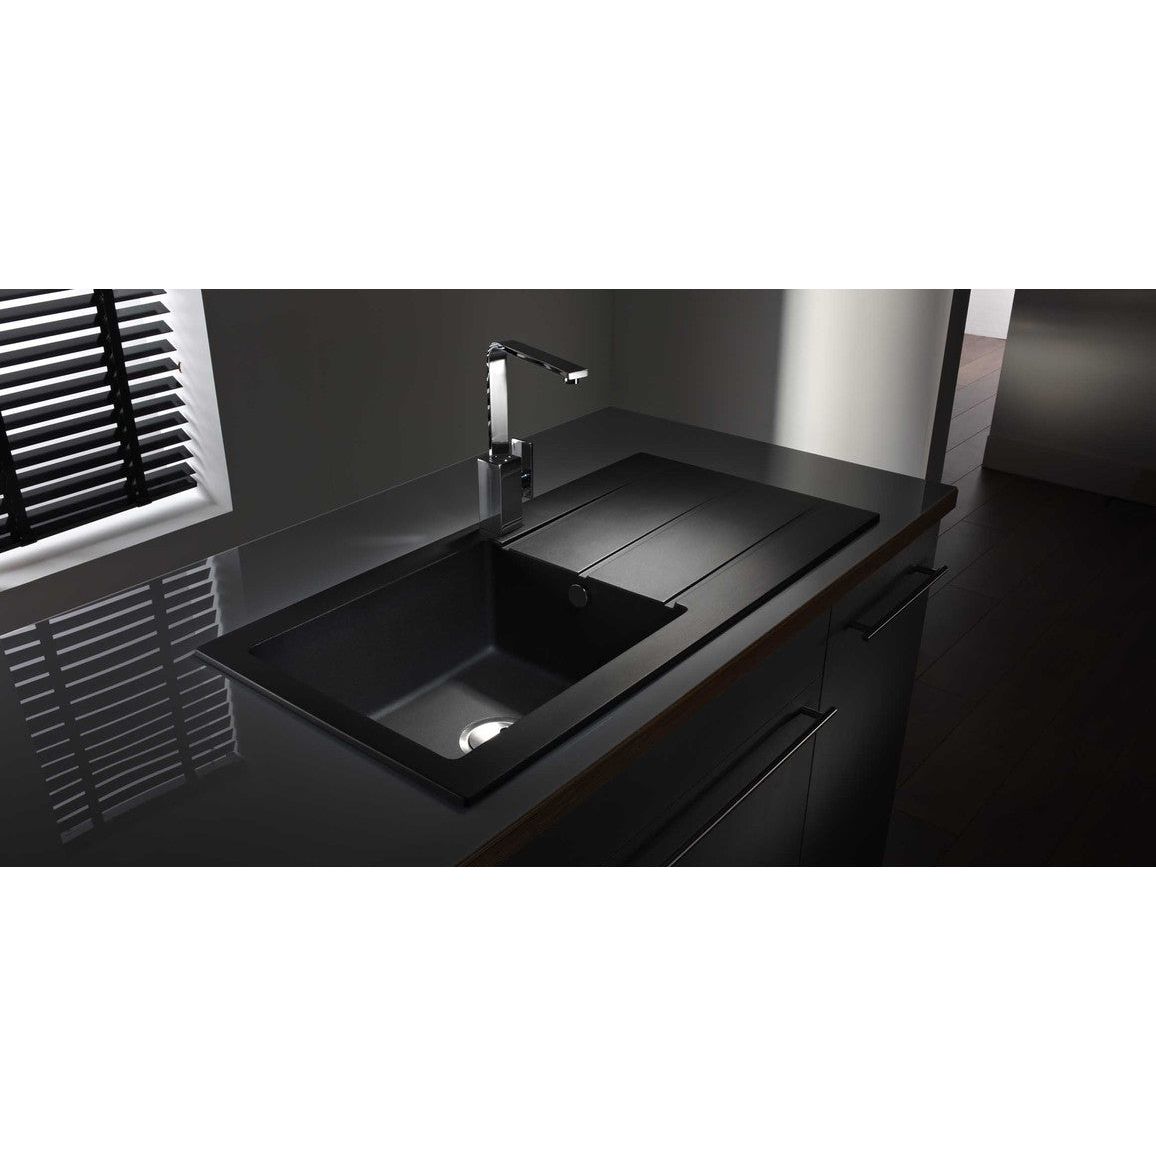 Abode Zero 1B & Drainer Granite Inset Sink - Grey Metallic